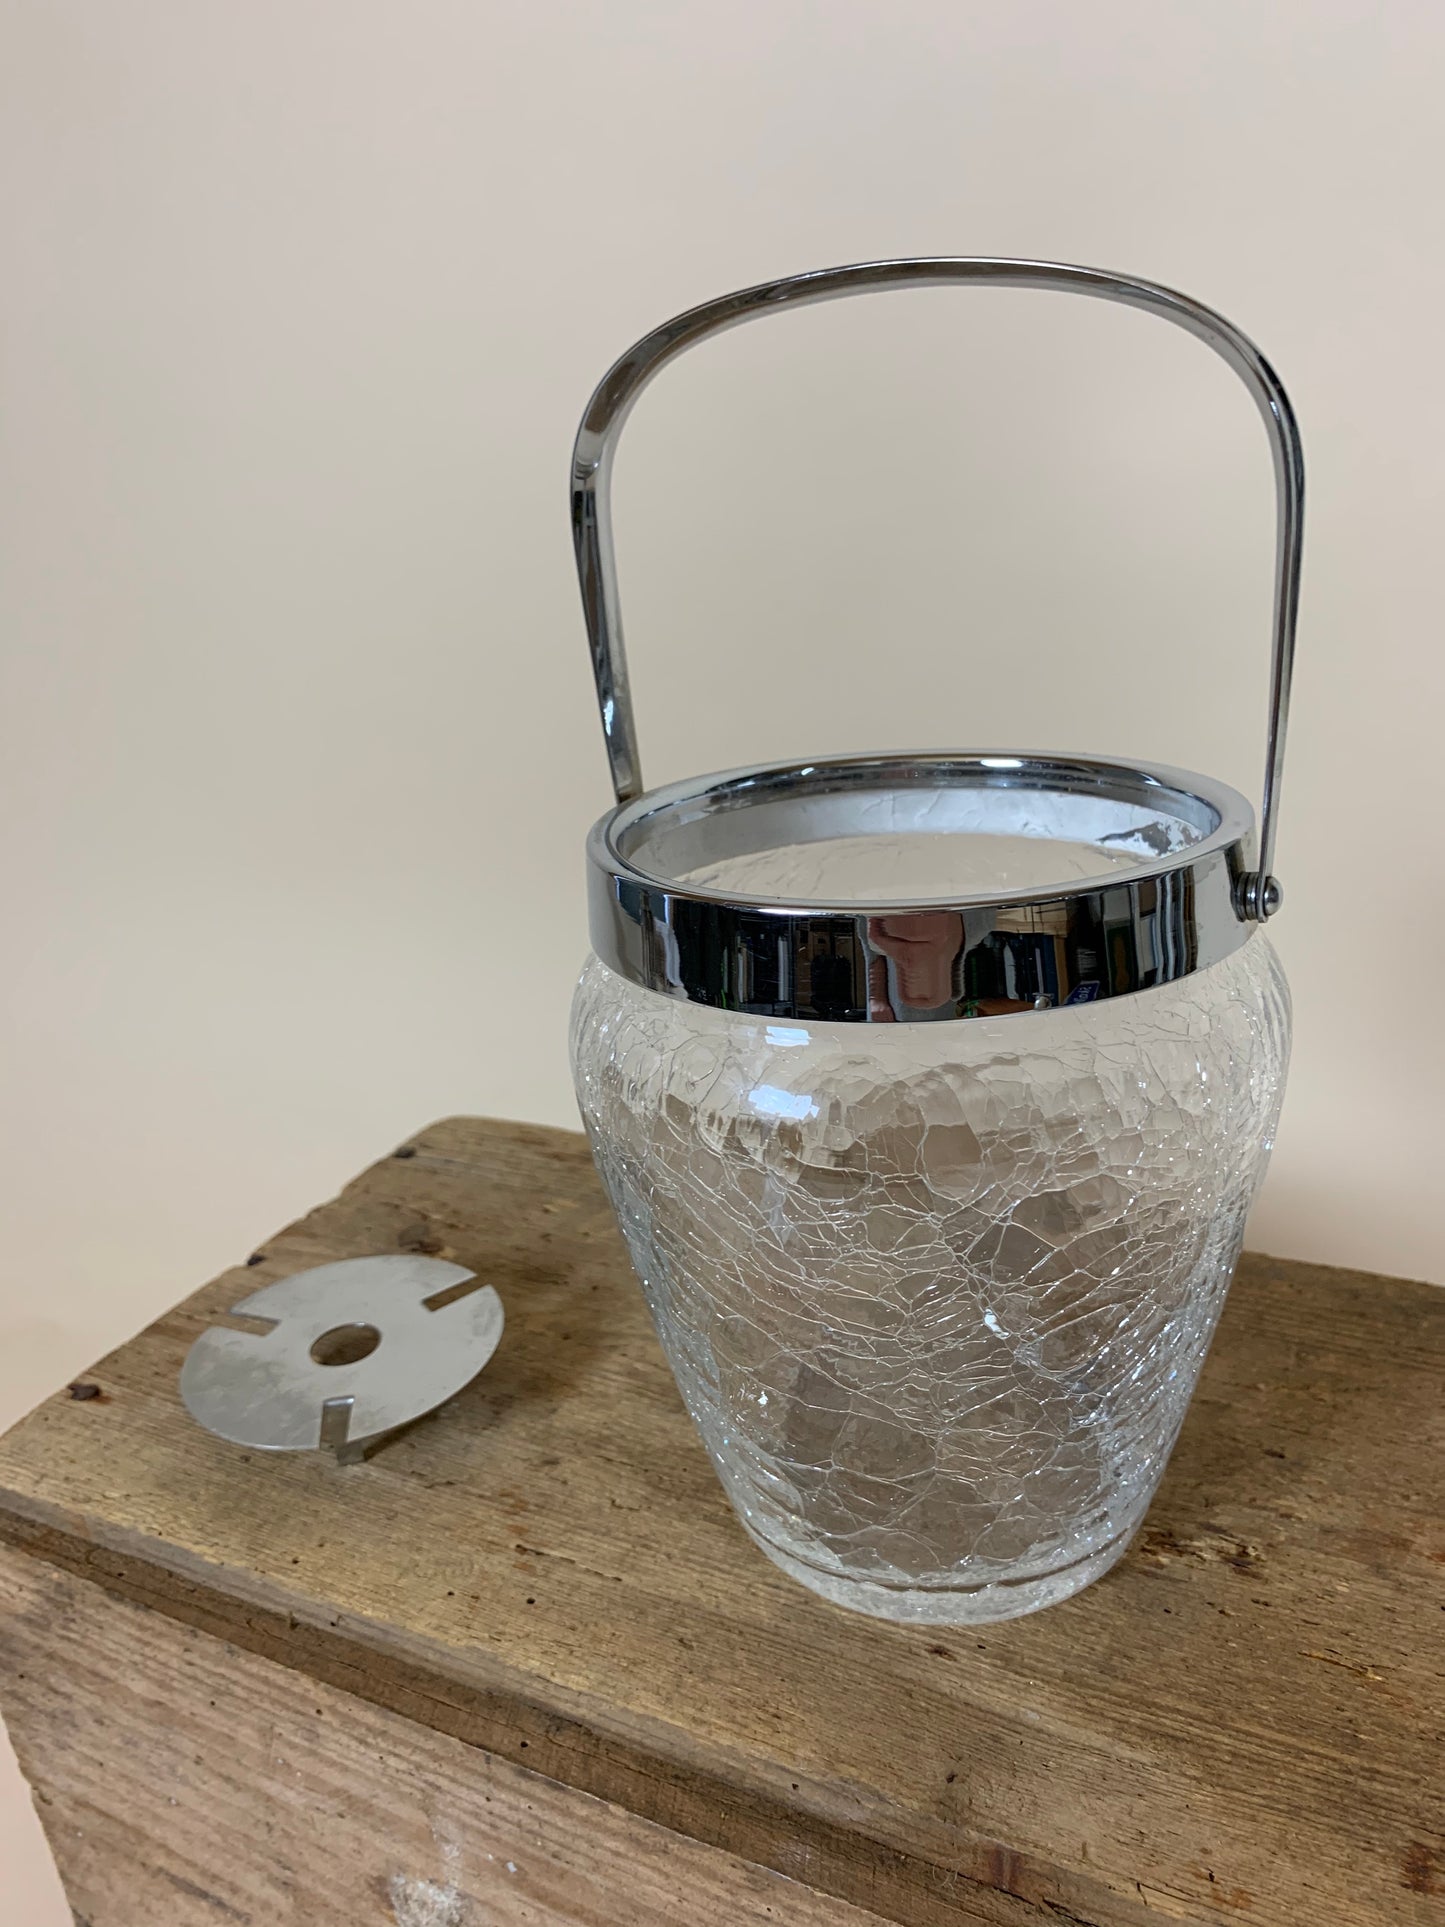 Isspand i glas med stålkant